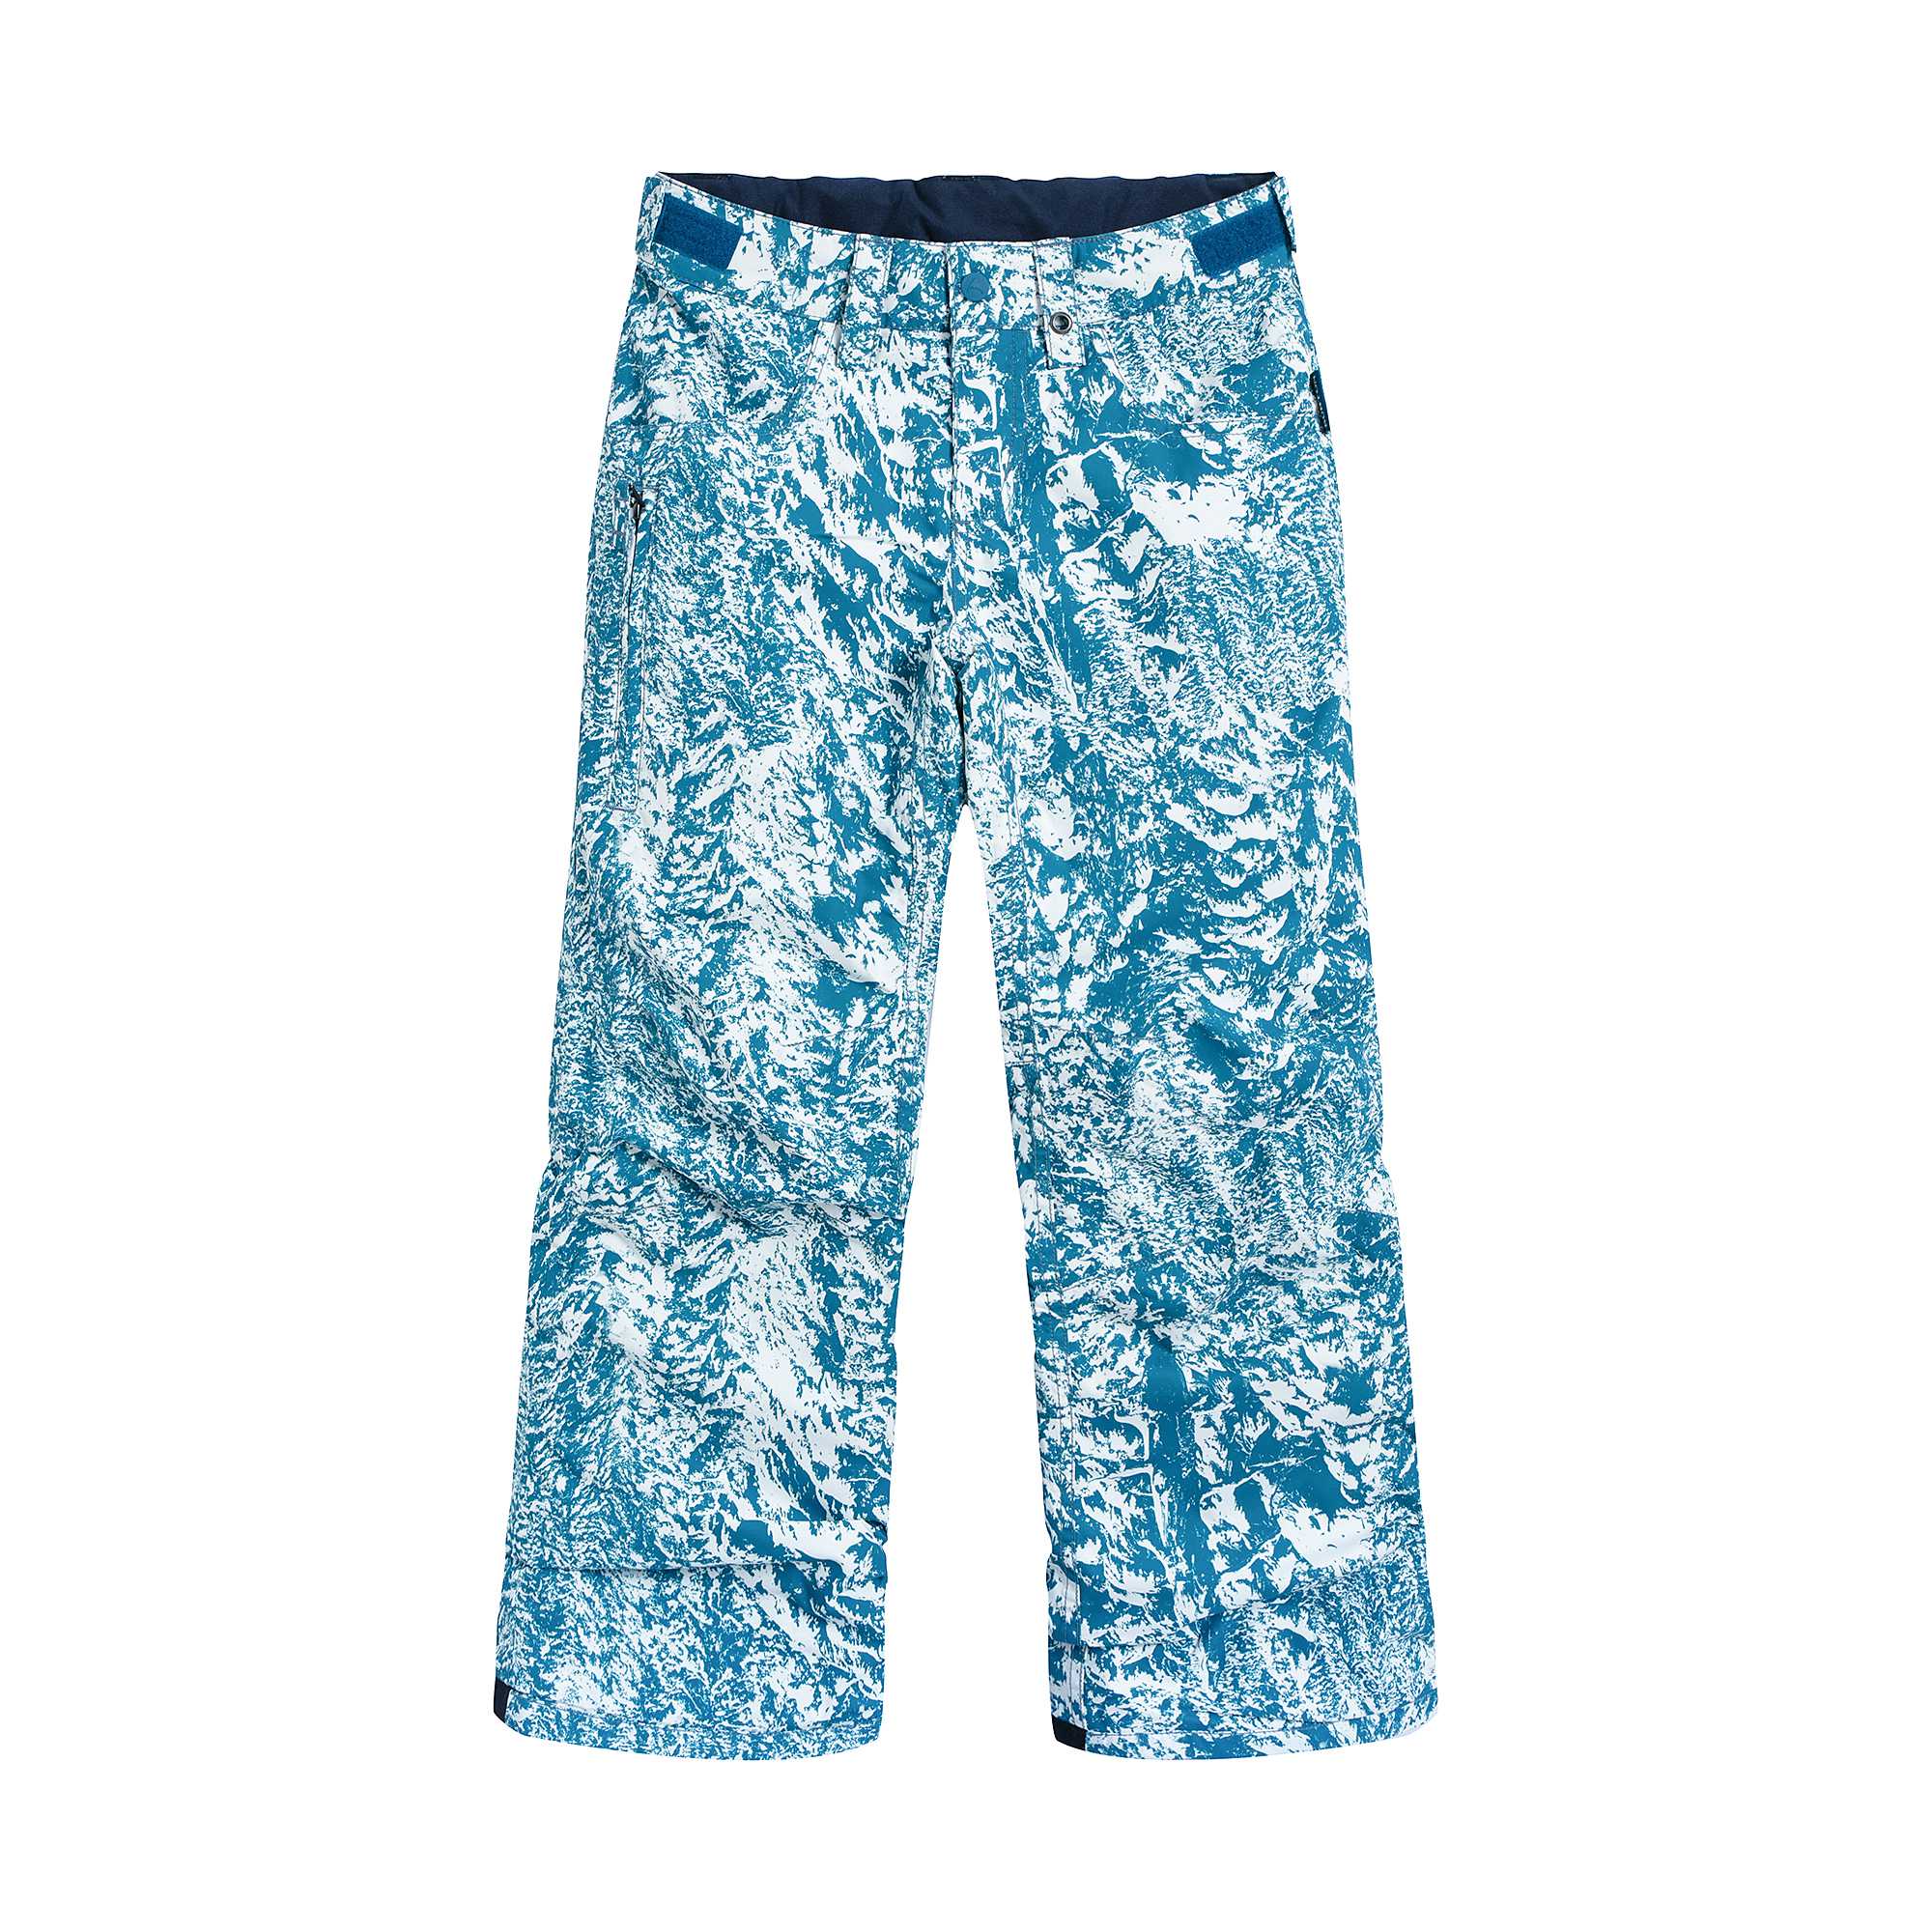 Boys Blue Printed Ski Trousers